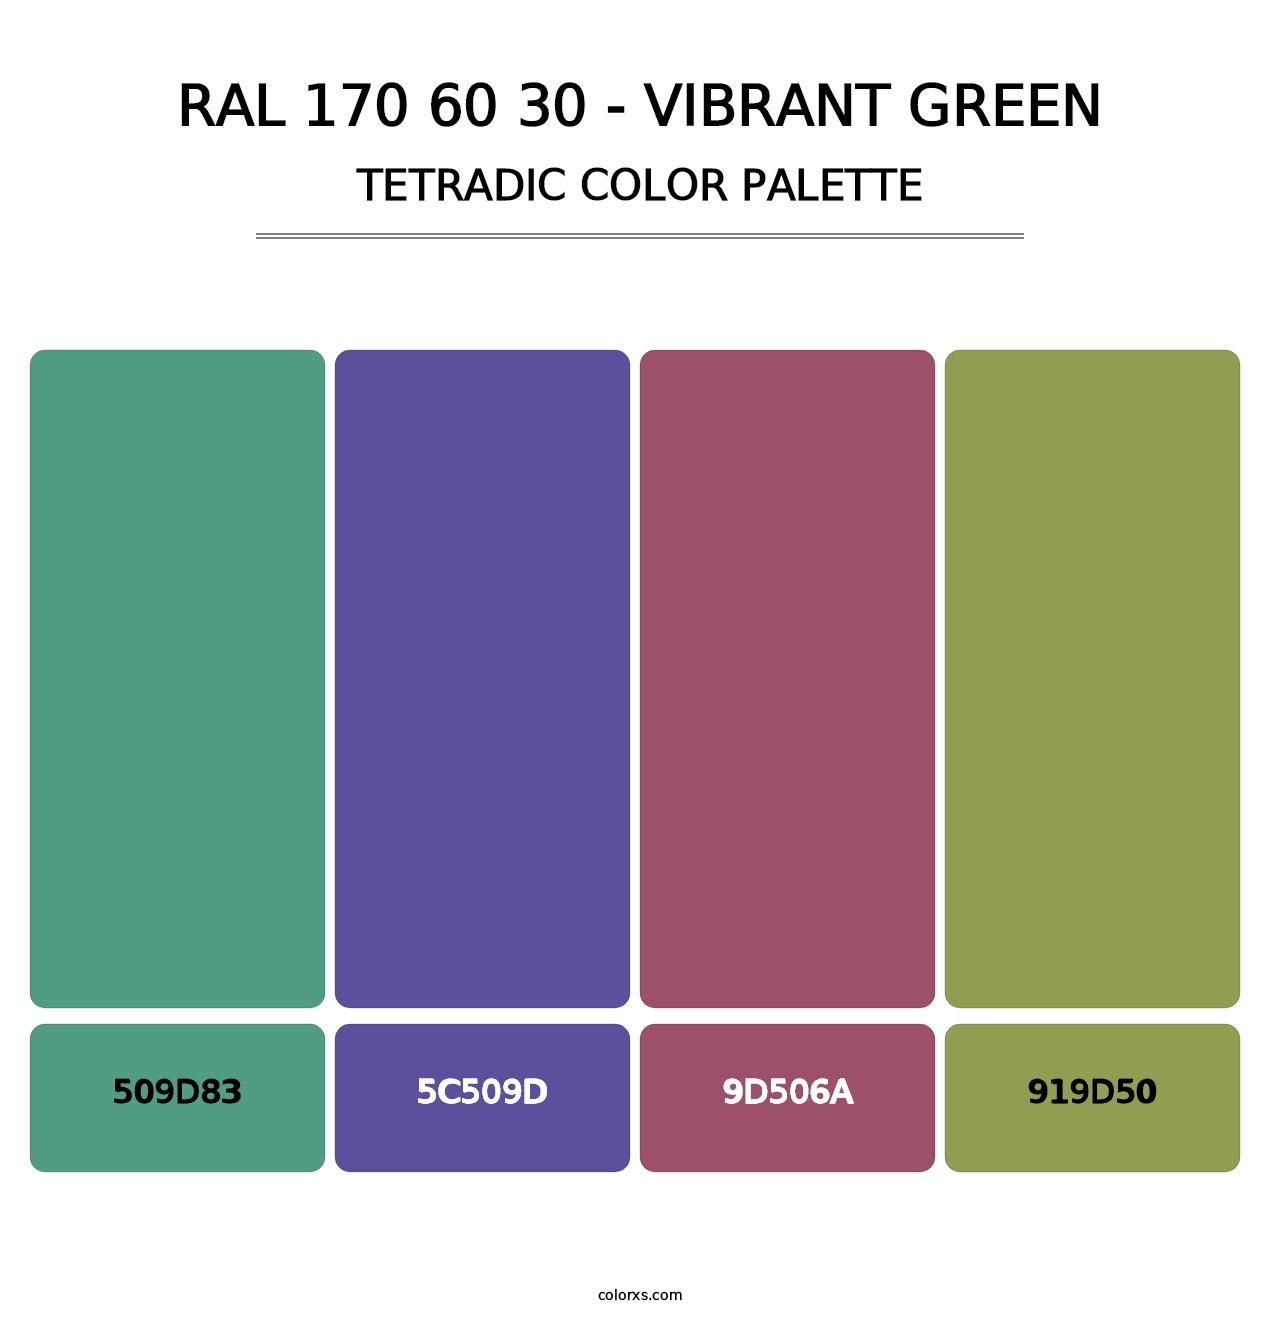 RAL 170 60 30 - Vibrant Green - Tetradic Color Palette